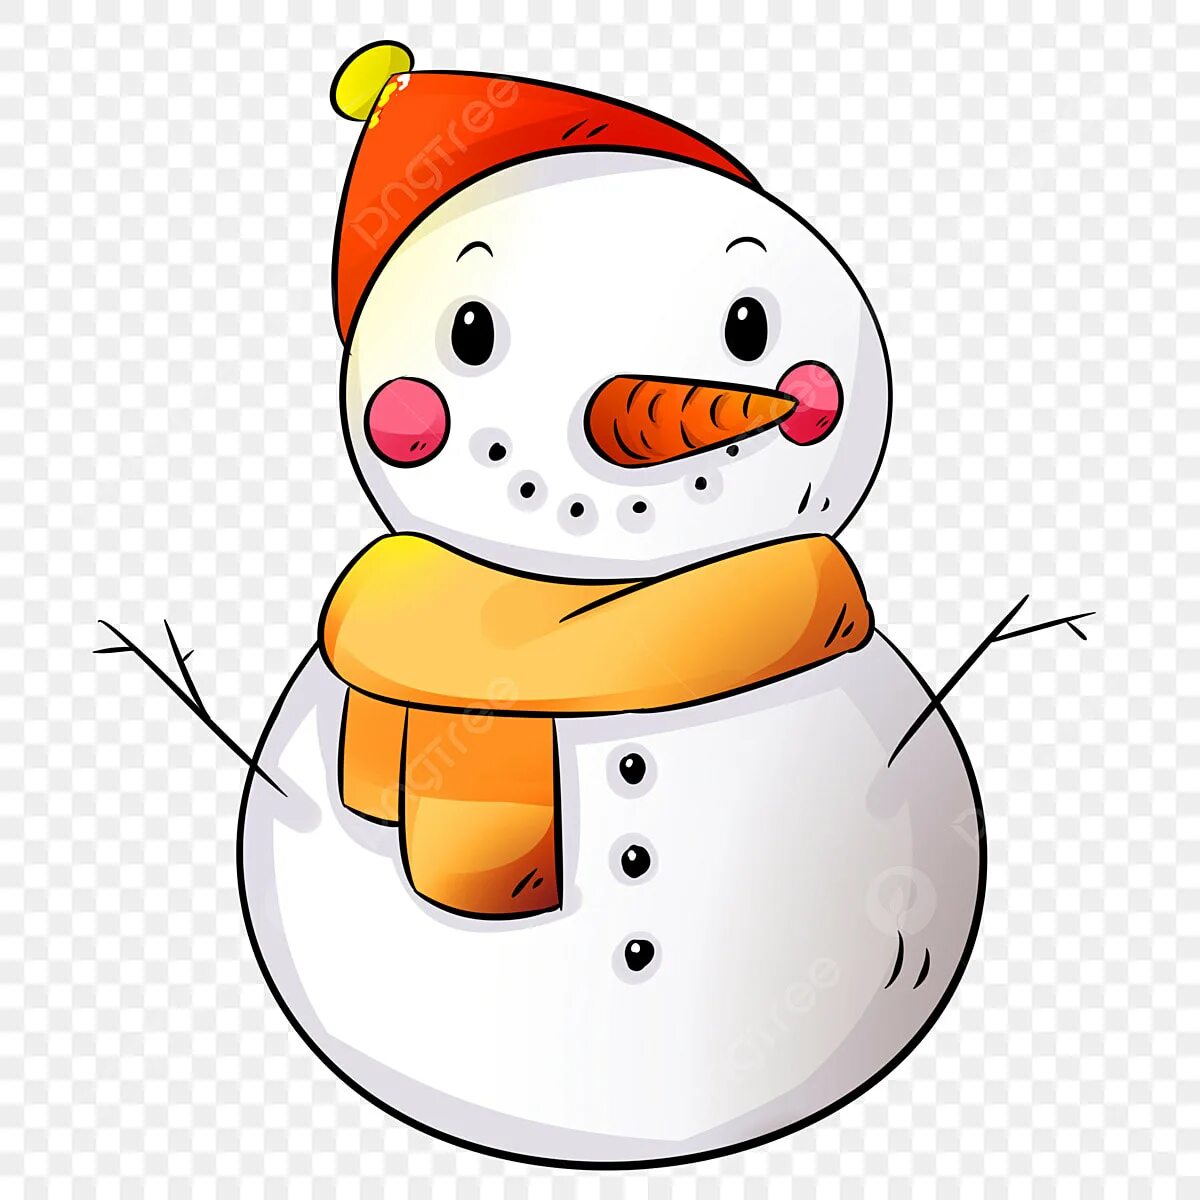 Снеговик с ведром и морковкой. Нос морковка для снеговика. Морковка для снеговика. Нос снеговика. Картинка снеговики без морковок